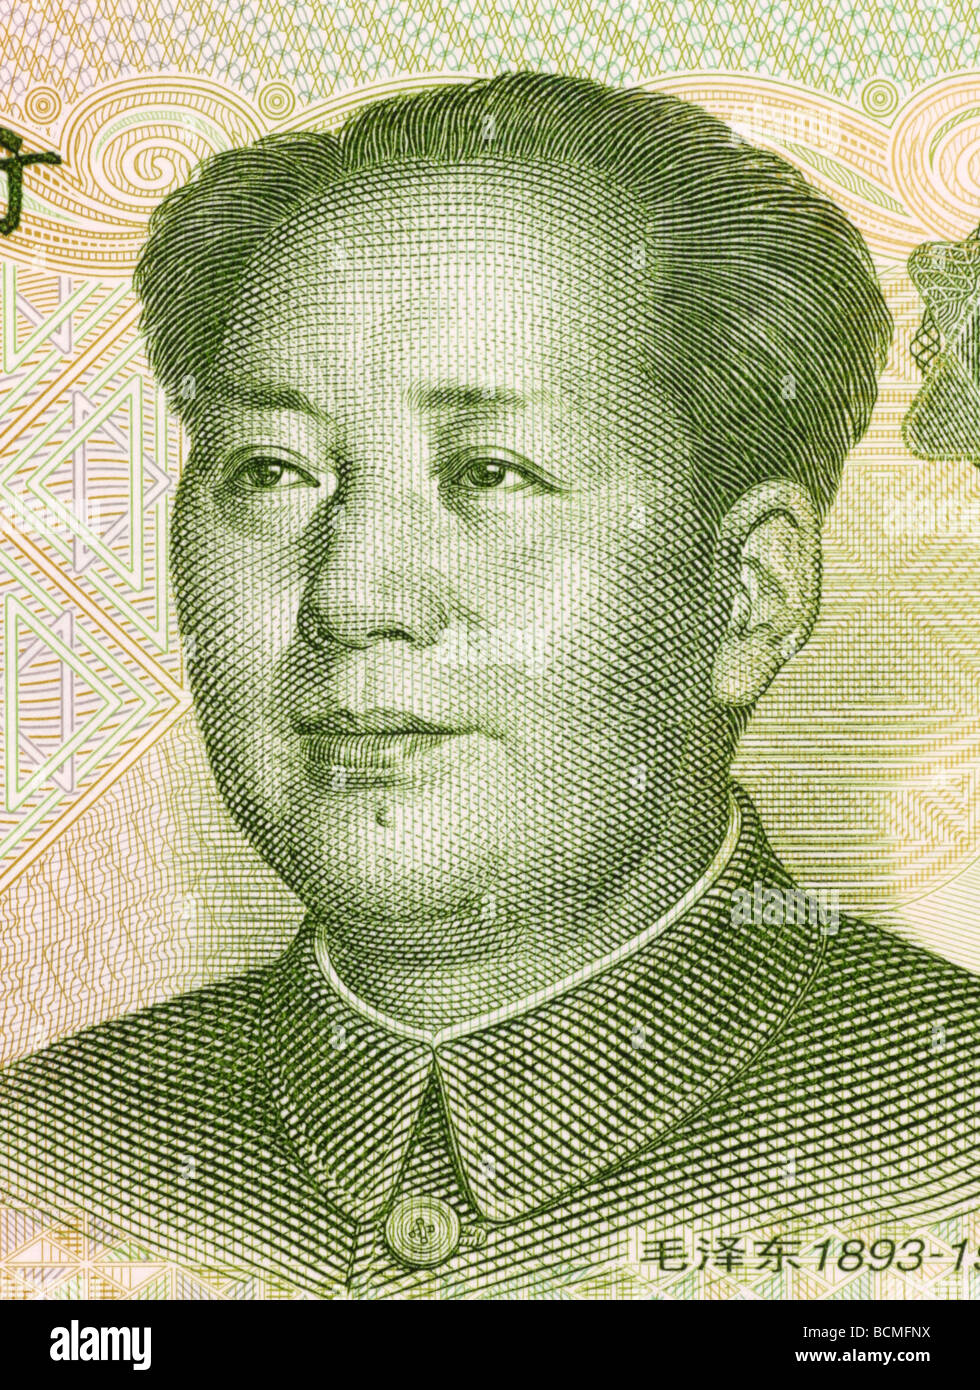 Mao Tse Tung on 1 Yuan 1999 Banknote from China Stock Photo